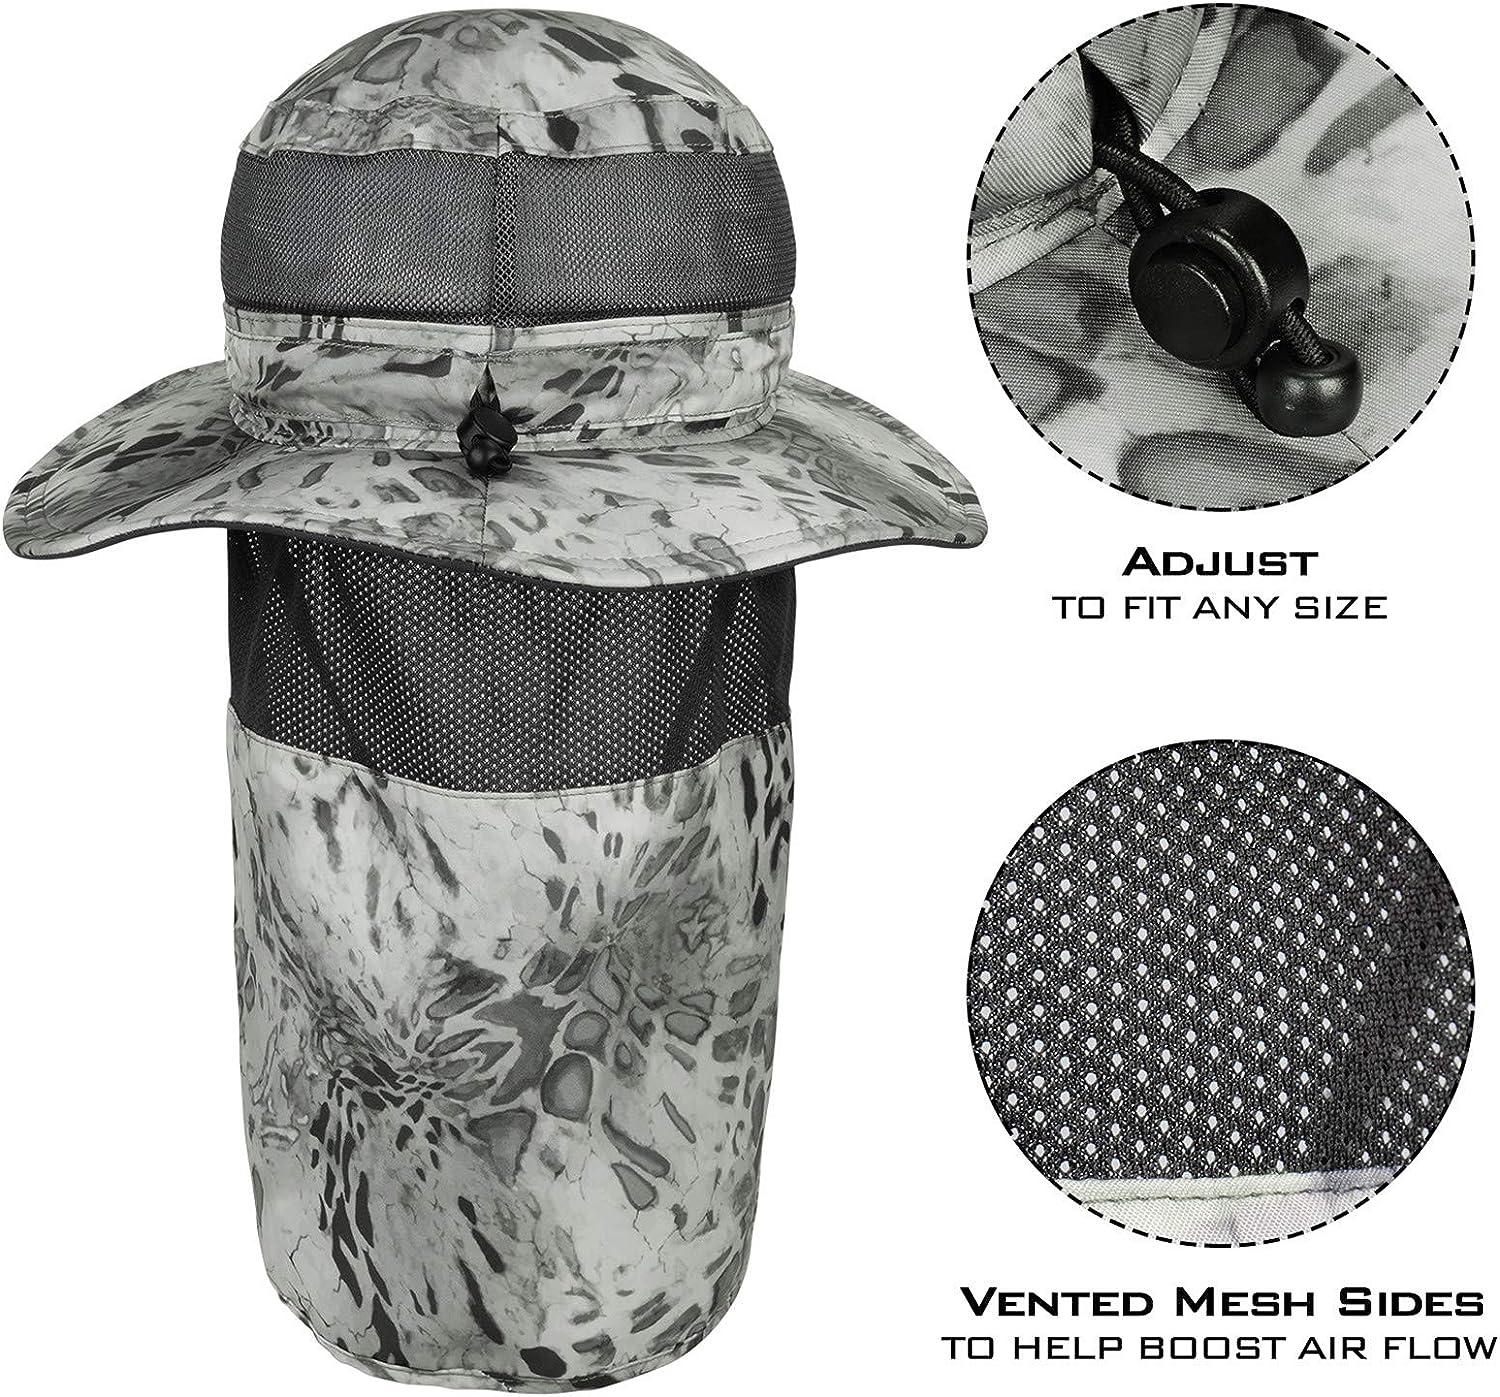 KastKing Sol Armis UPF 50 Boonie Hat - Sun Protection Fishing Hat, Beach & Hiking Hat, Paddling, Rowing, Kayaking Hat,Silver Mist